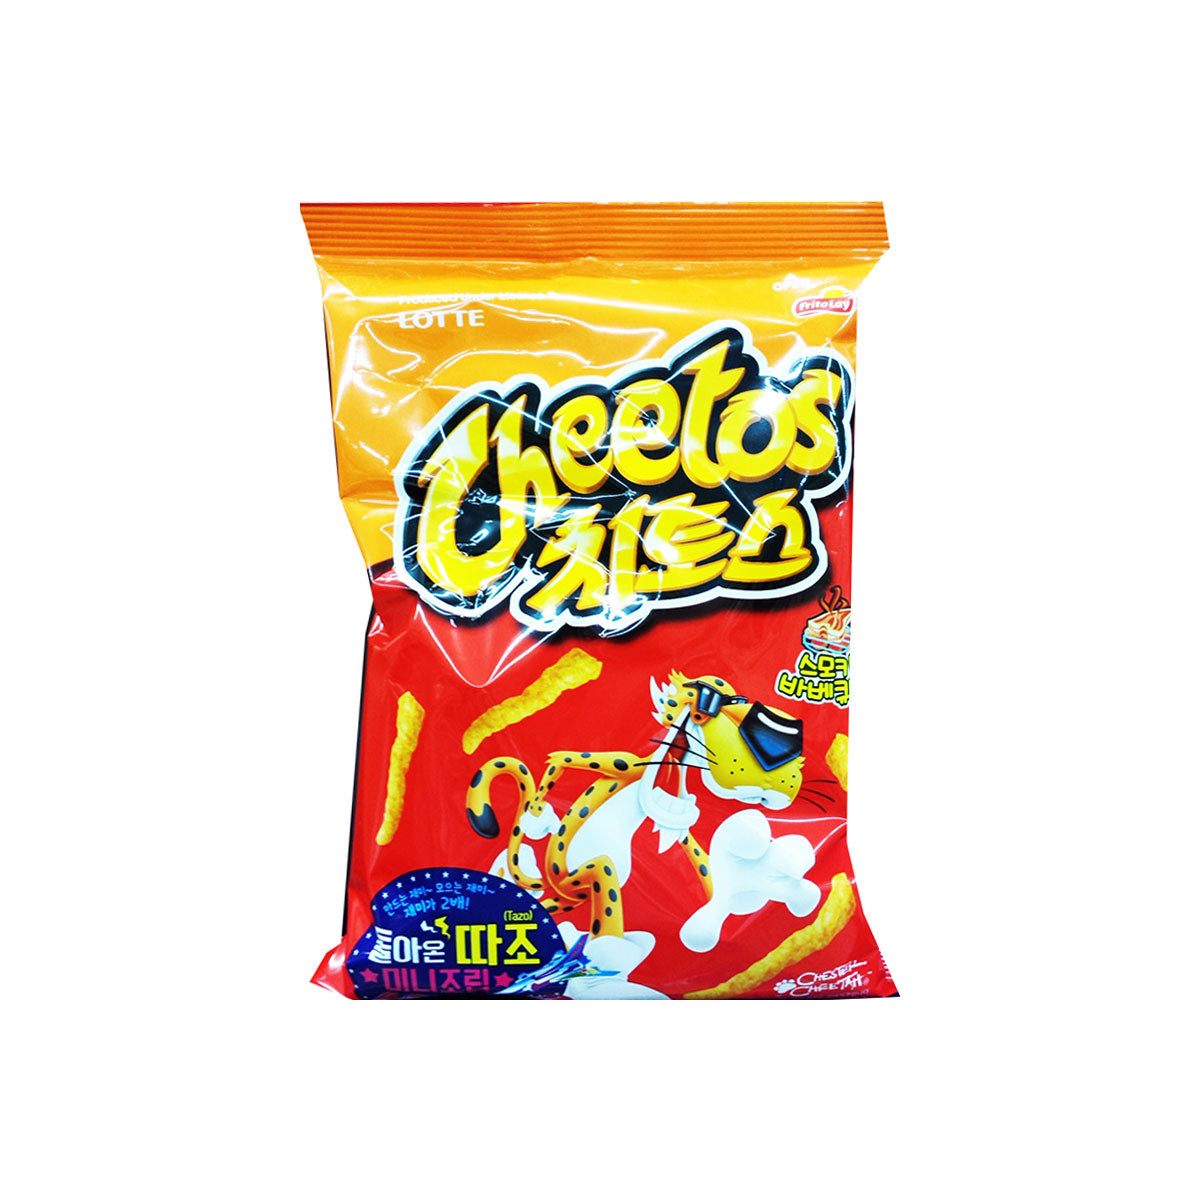 Cheetos Smokey Bbq 16/82g 치토스 스모키 바베큐